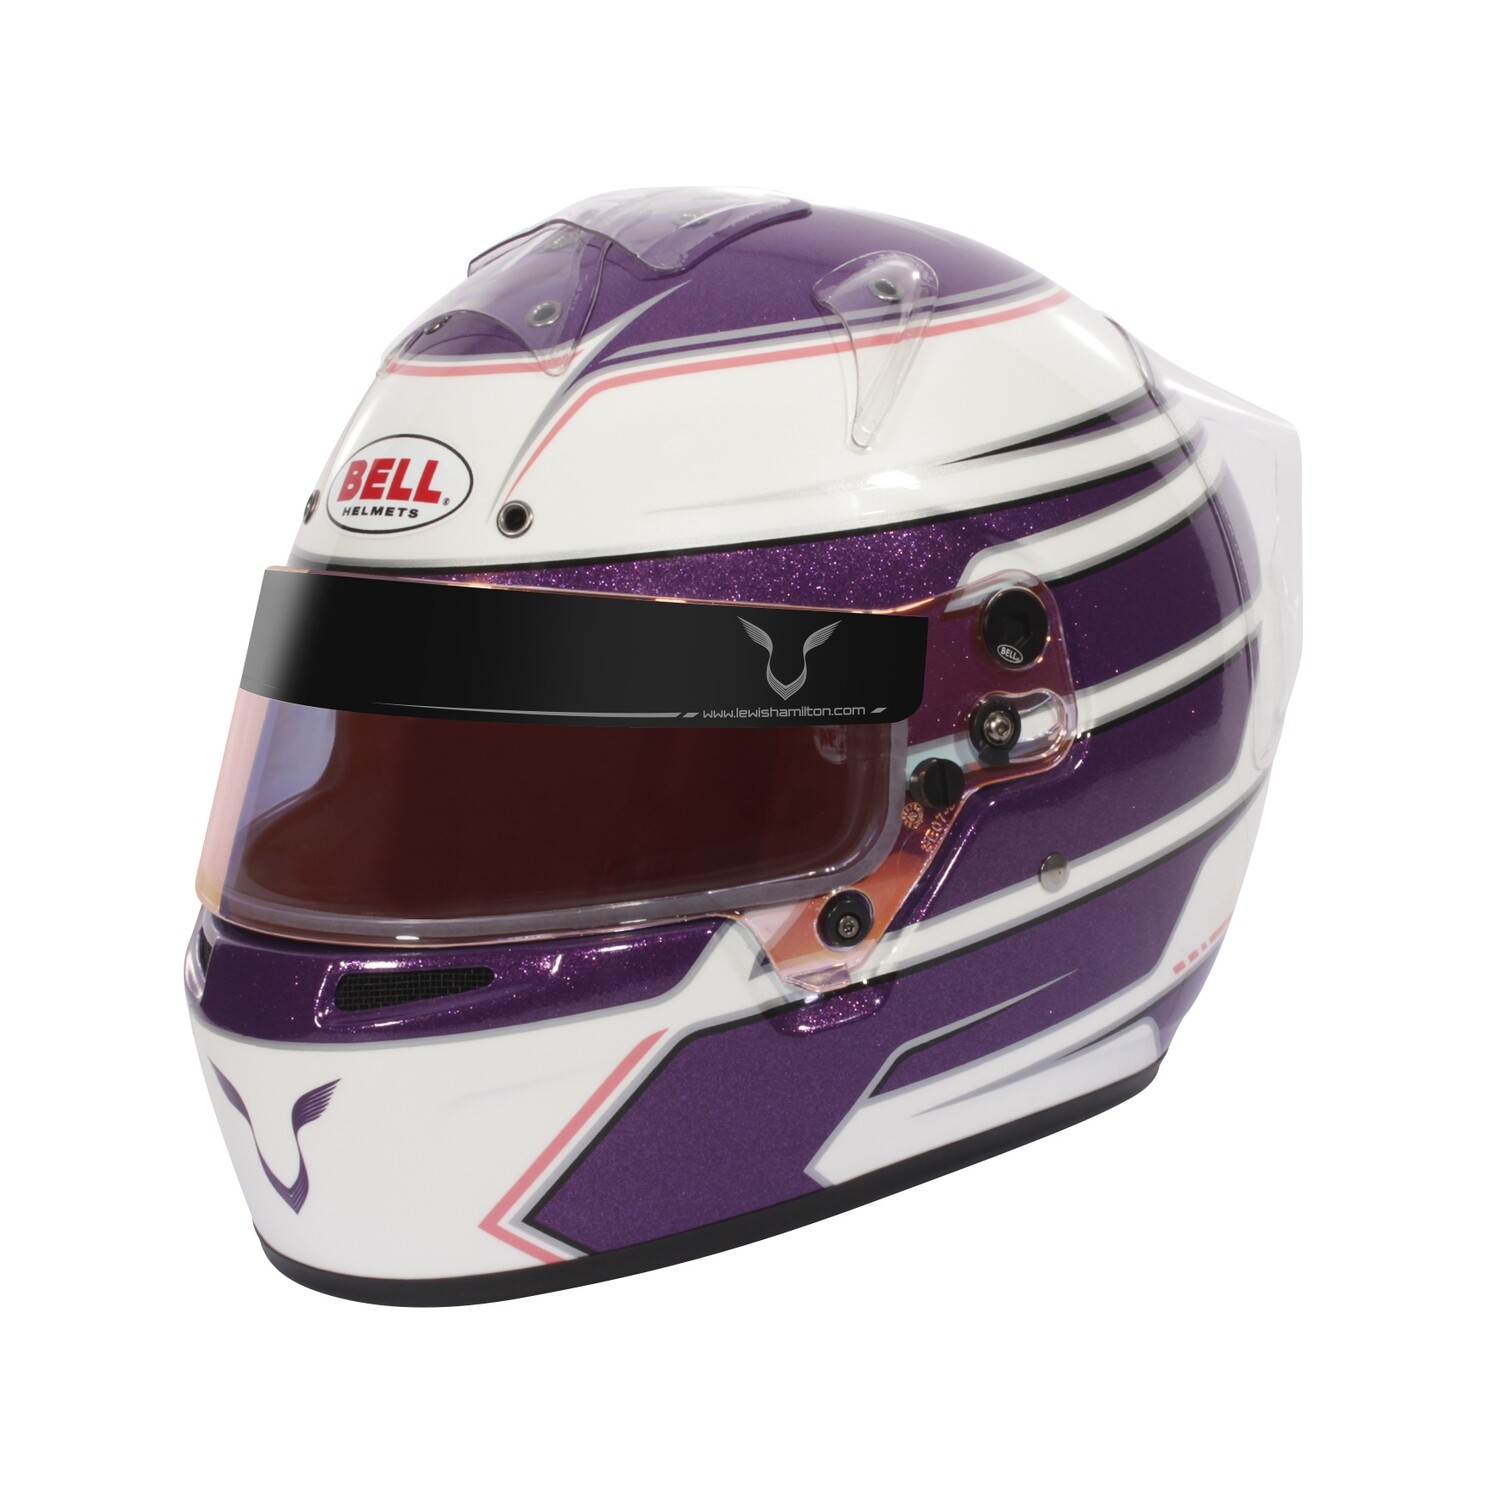 Bell KC7-CMR LH White / Purple helmet